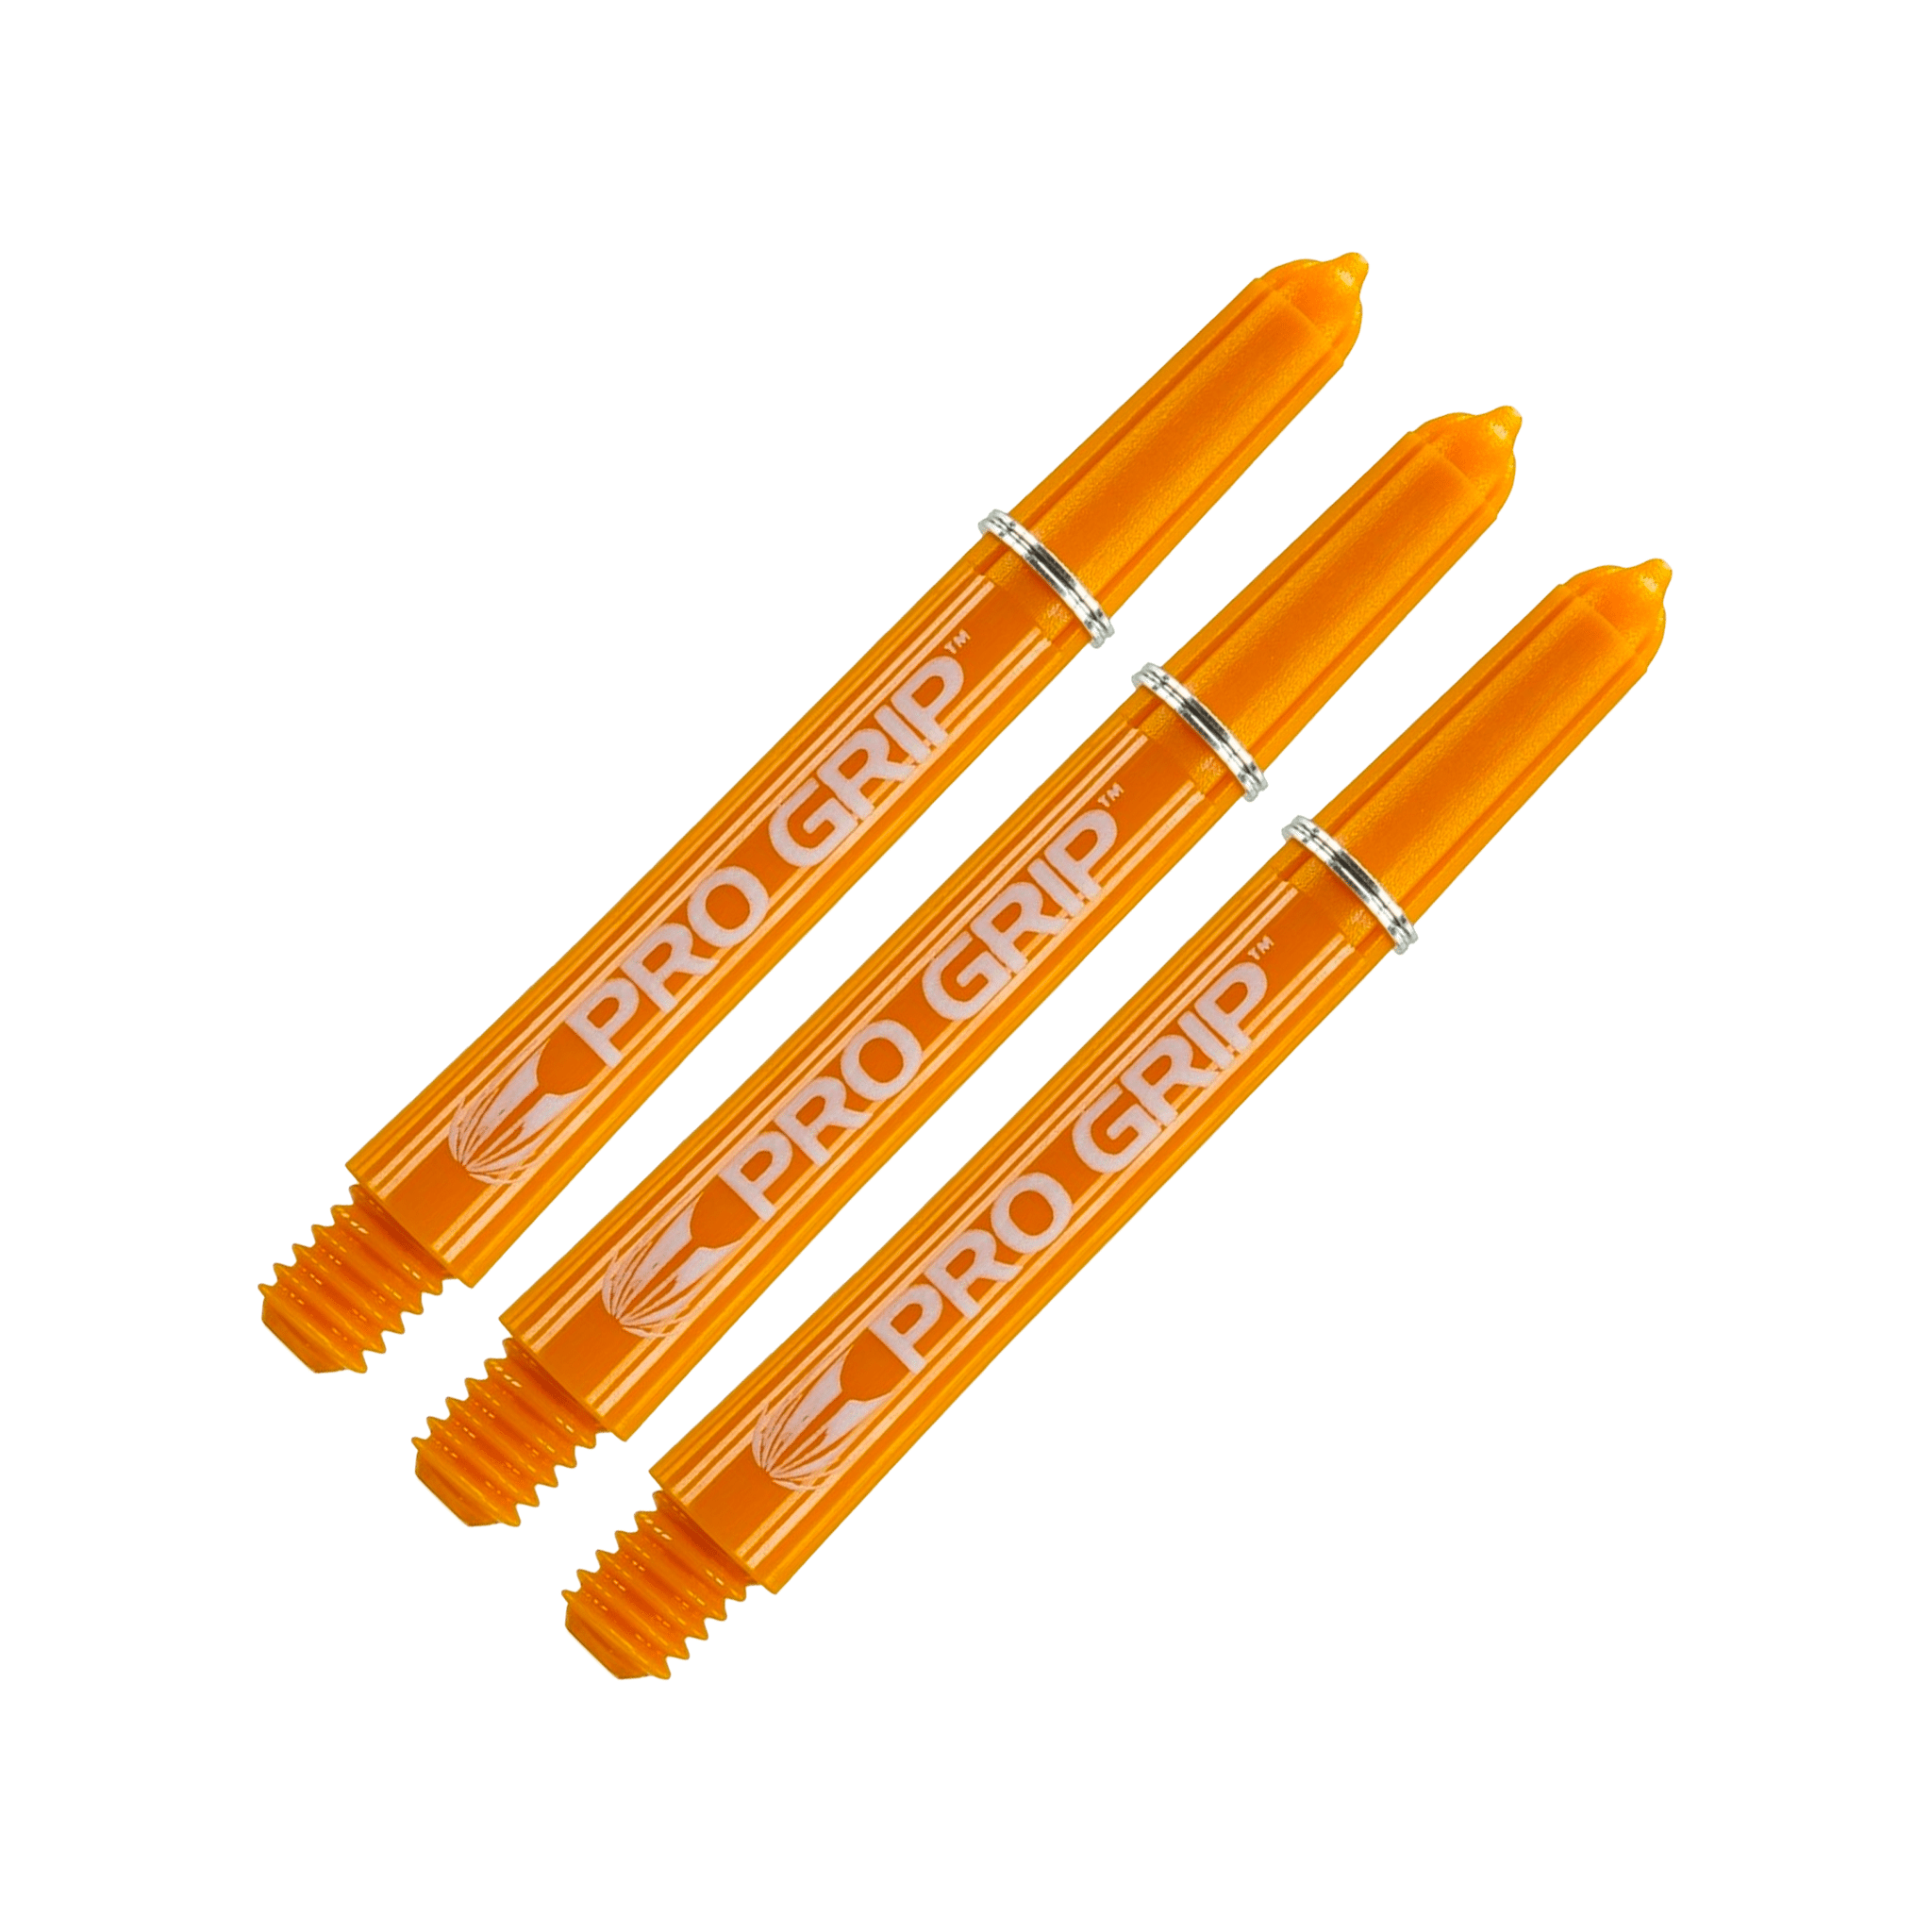 Target Pro Grip Multi Pack - Nylon Dart Shafts (3 Sets) Orange / Intermediate (41mm) Shafts